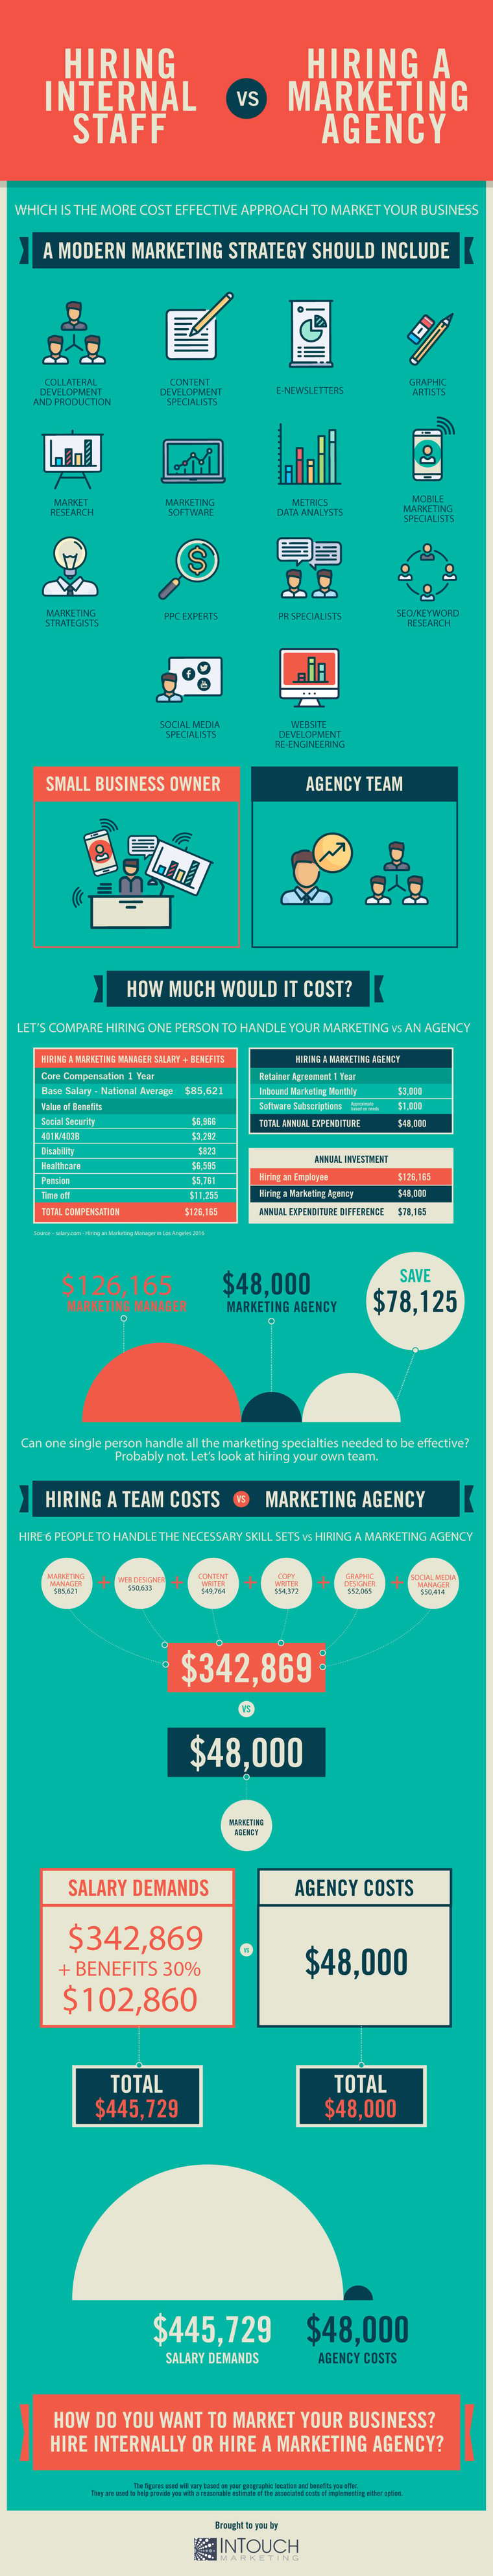 Hiring-A-Marketing-Firm-vs-Hiring-Internal-Staff-Infographic